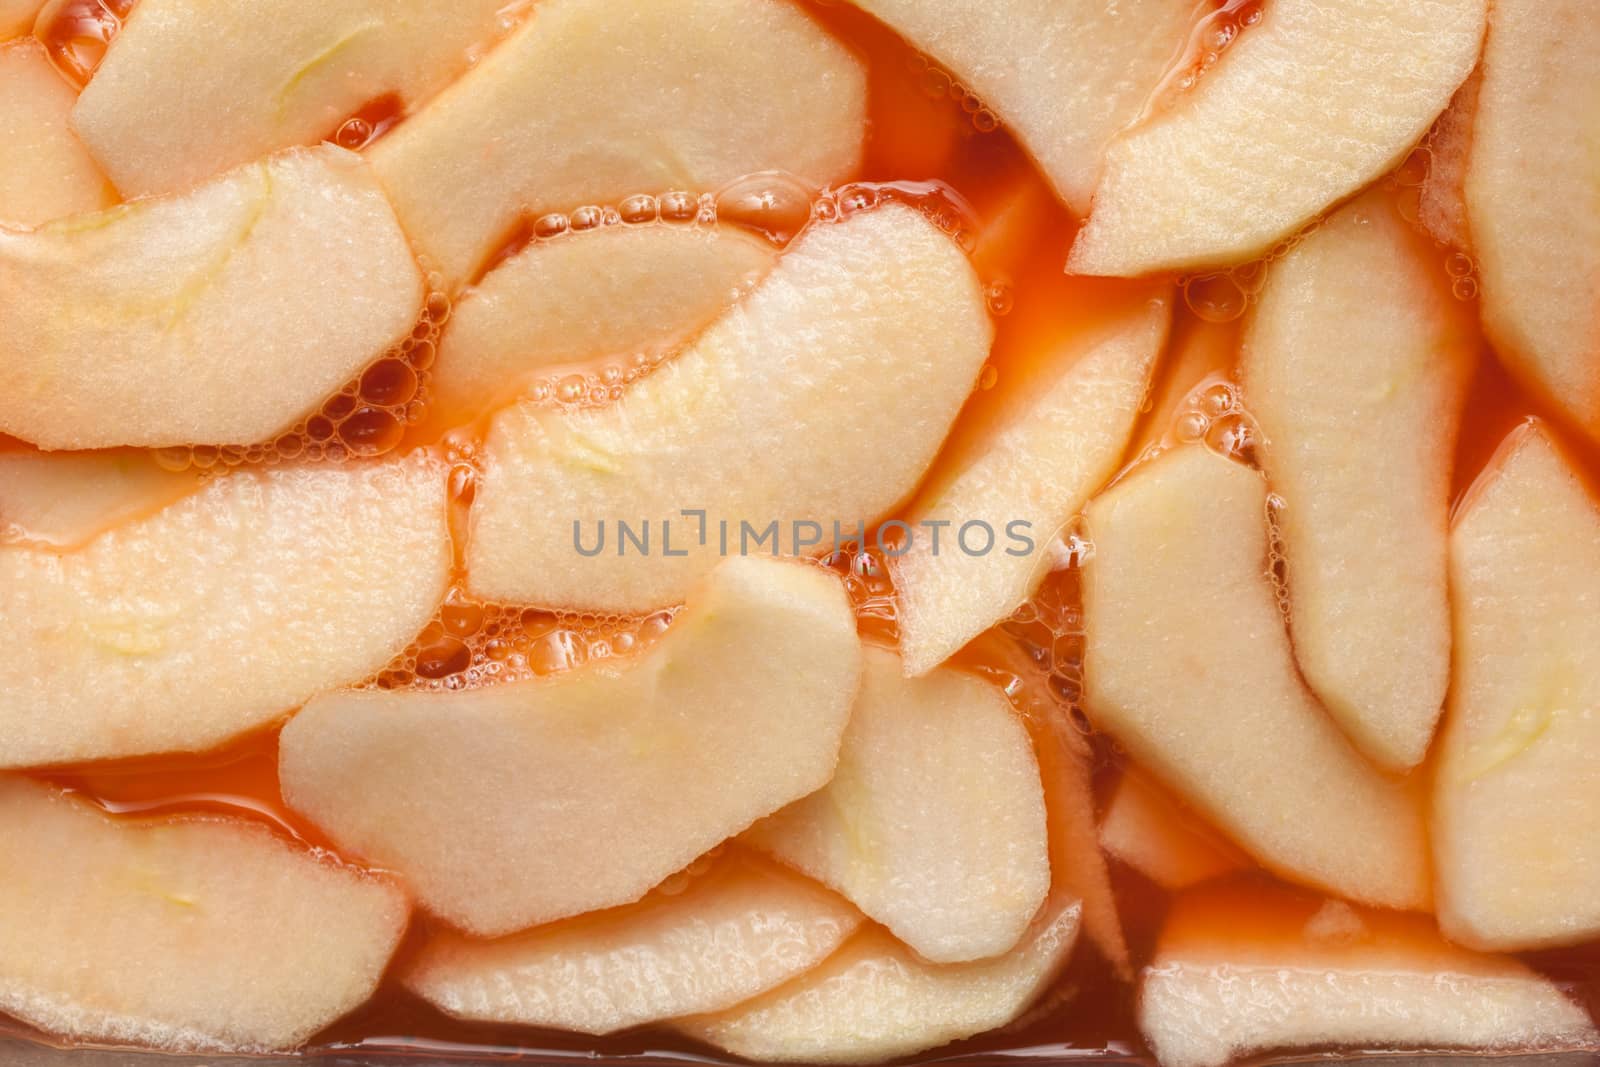 Apple slices, fruit background by Portokalis